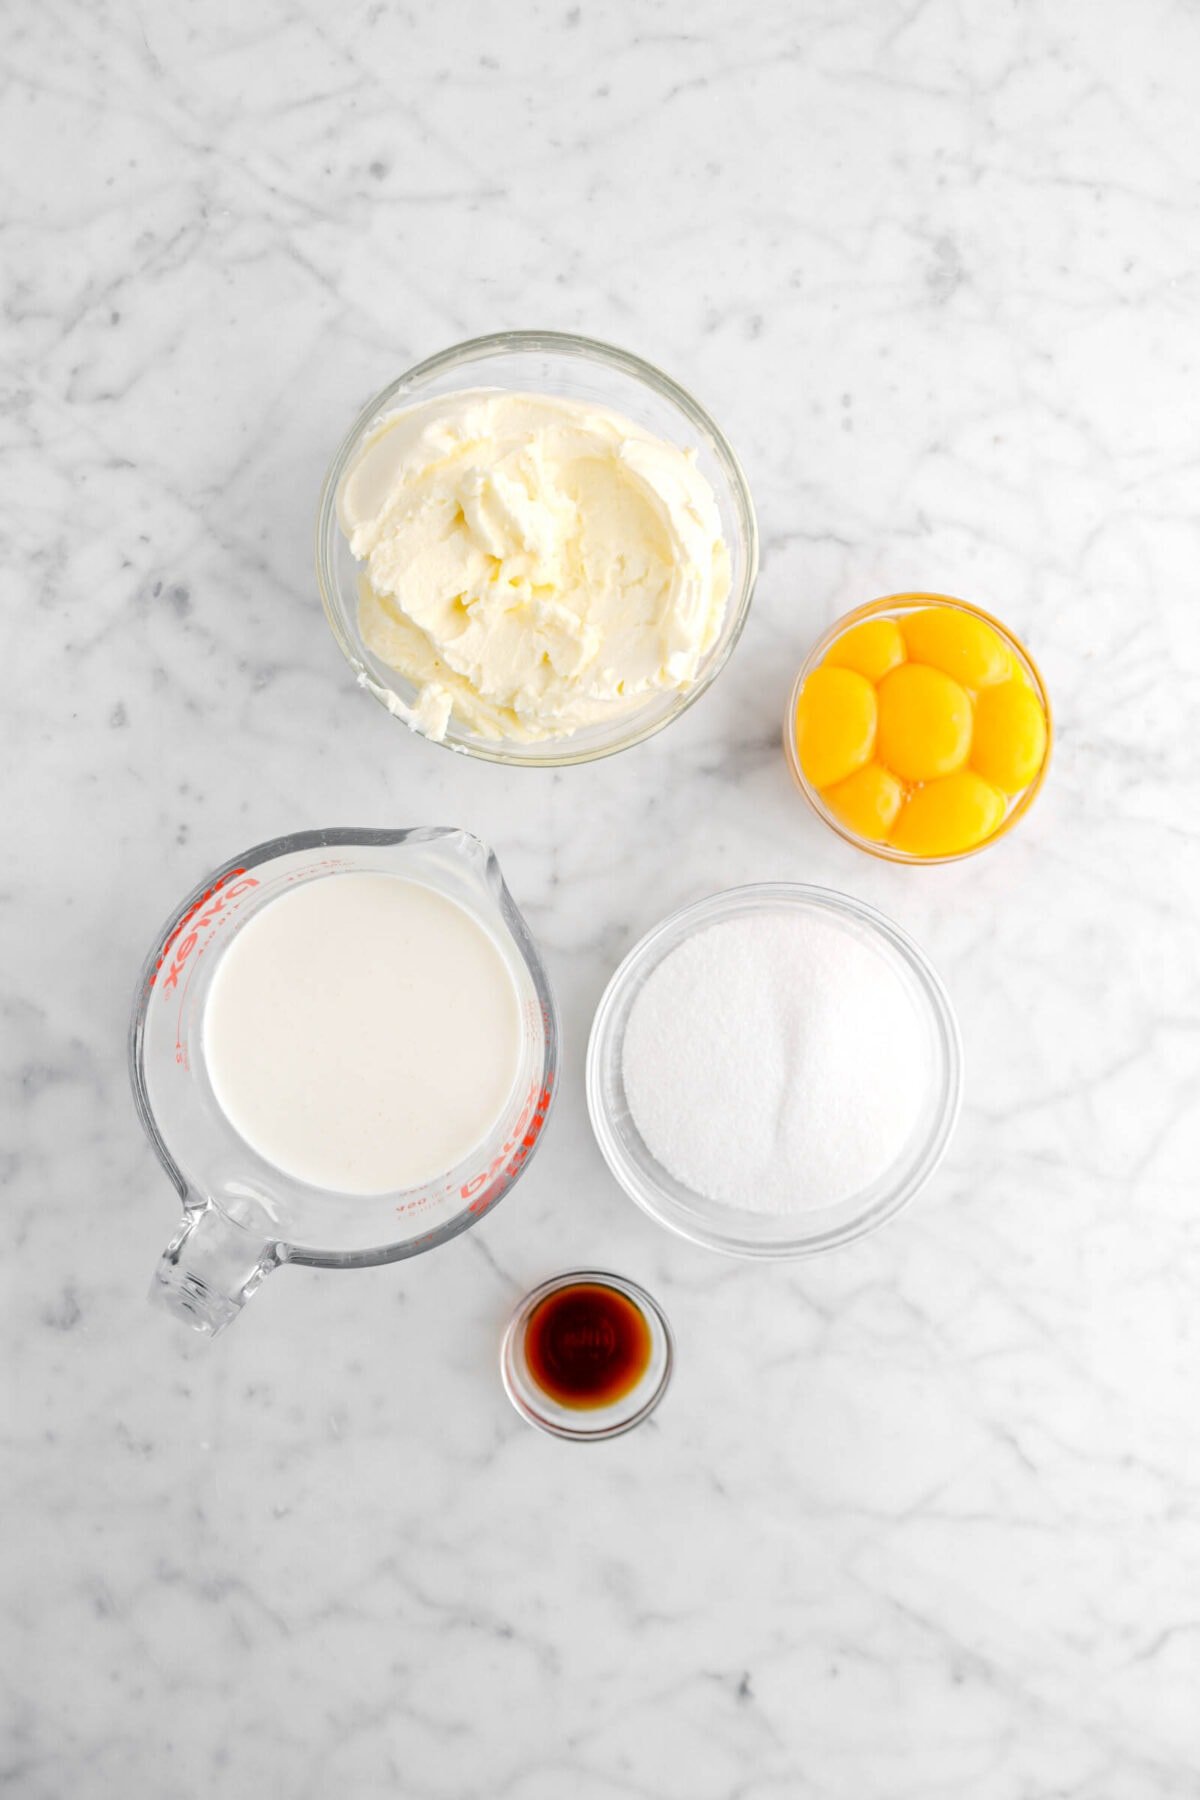 mascarpone, egg yolks, heavy cream, sugar, and vanilla on marble surface